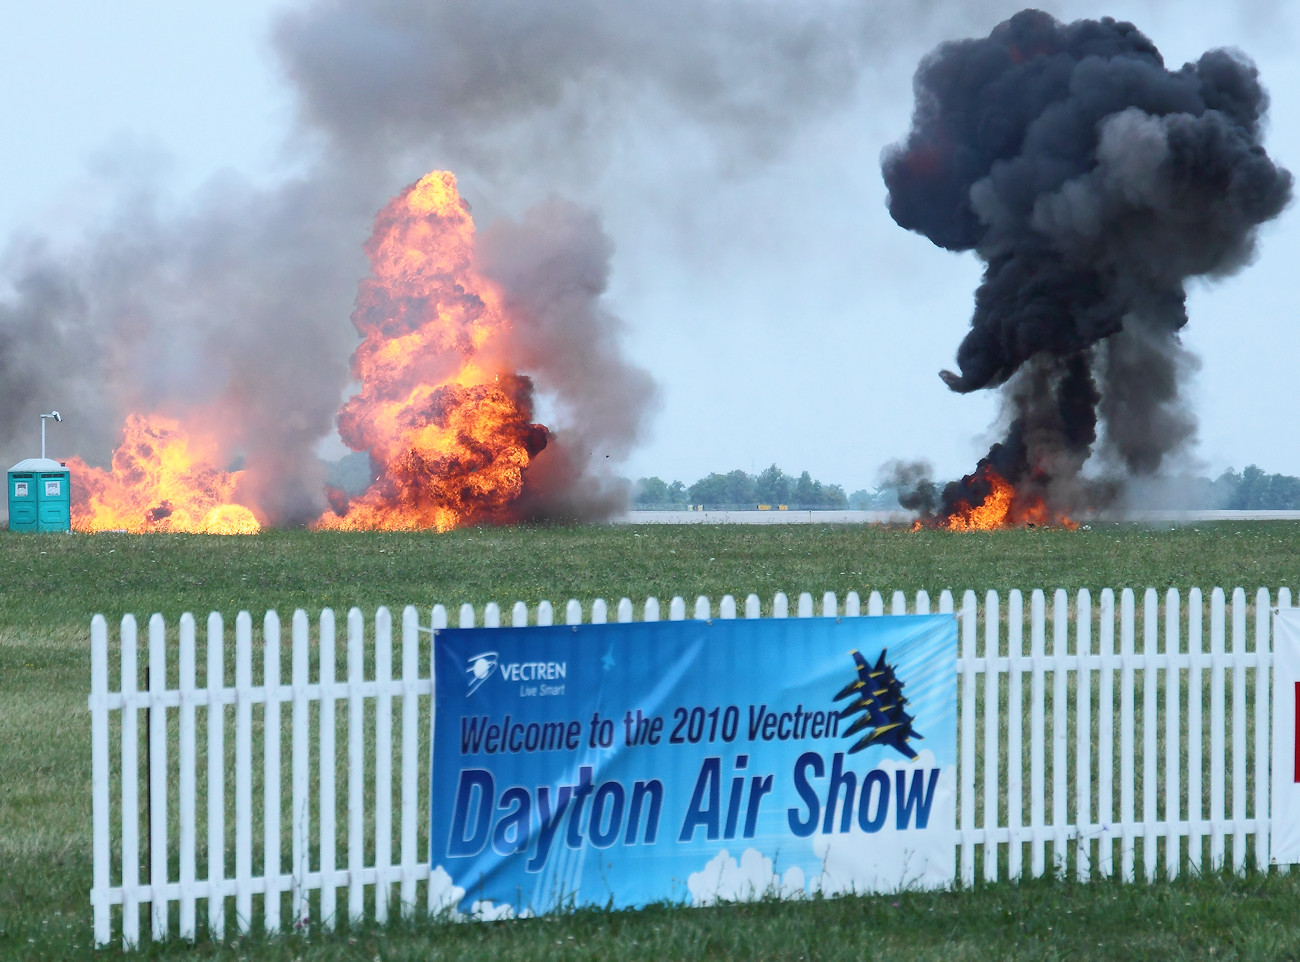 Daytom Air Show - Bombardierung